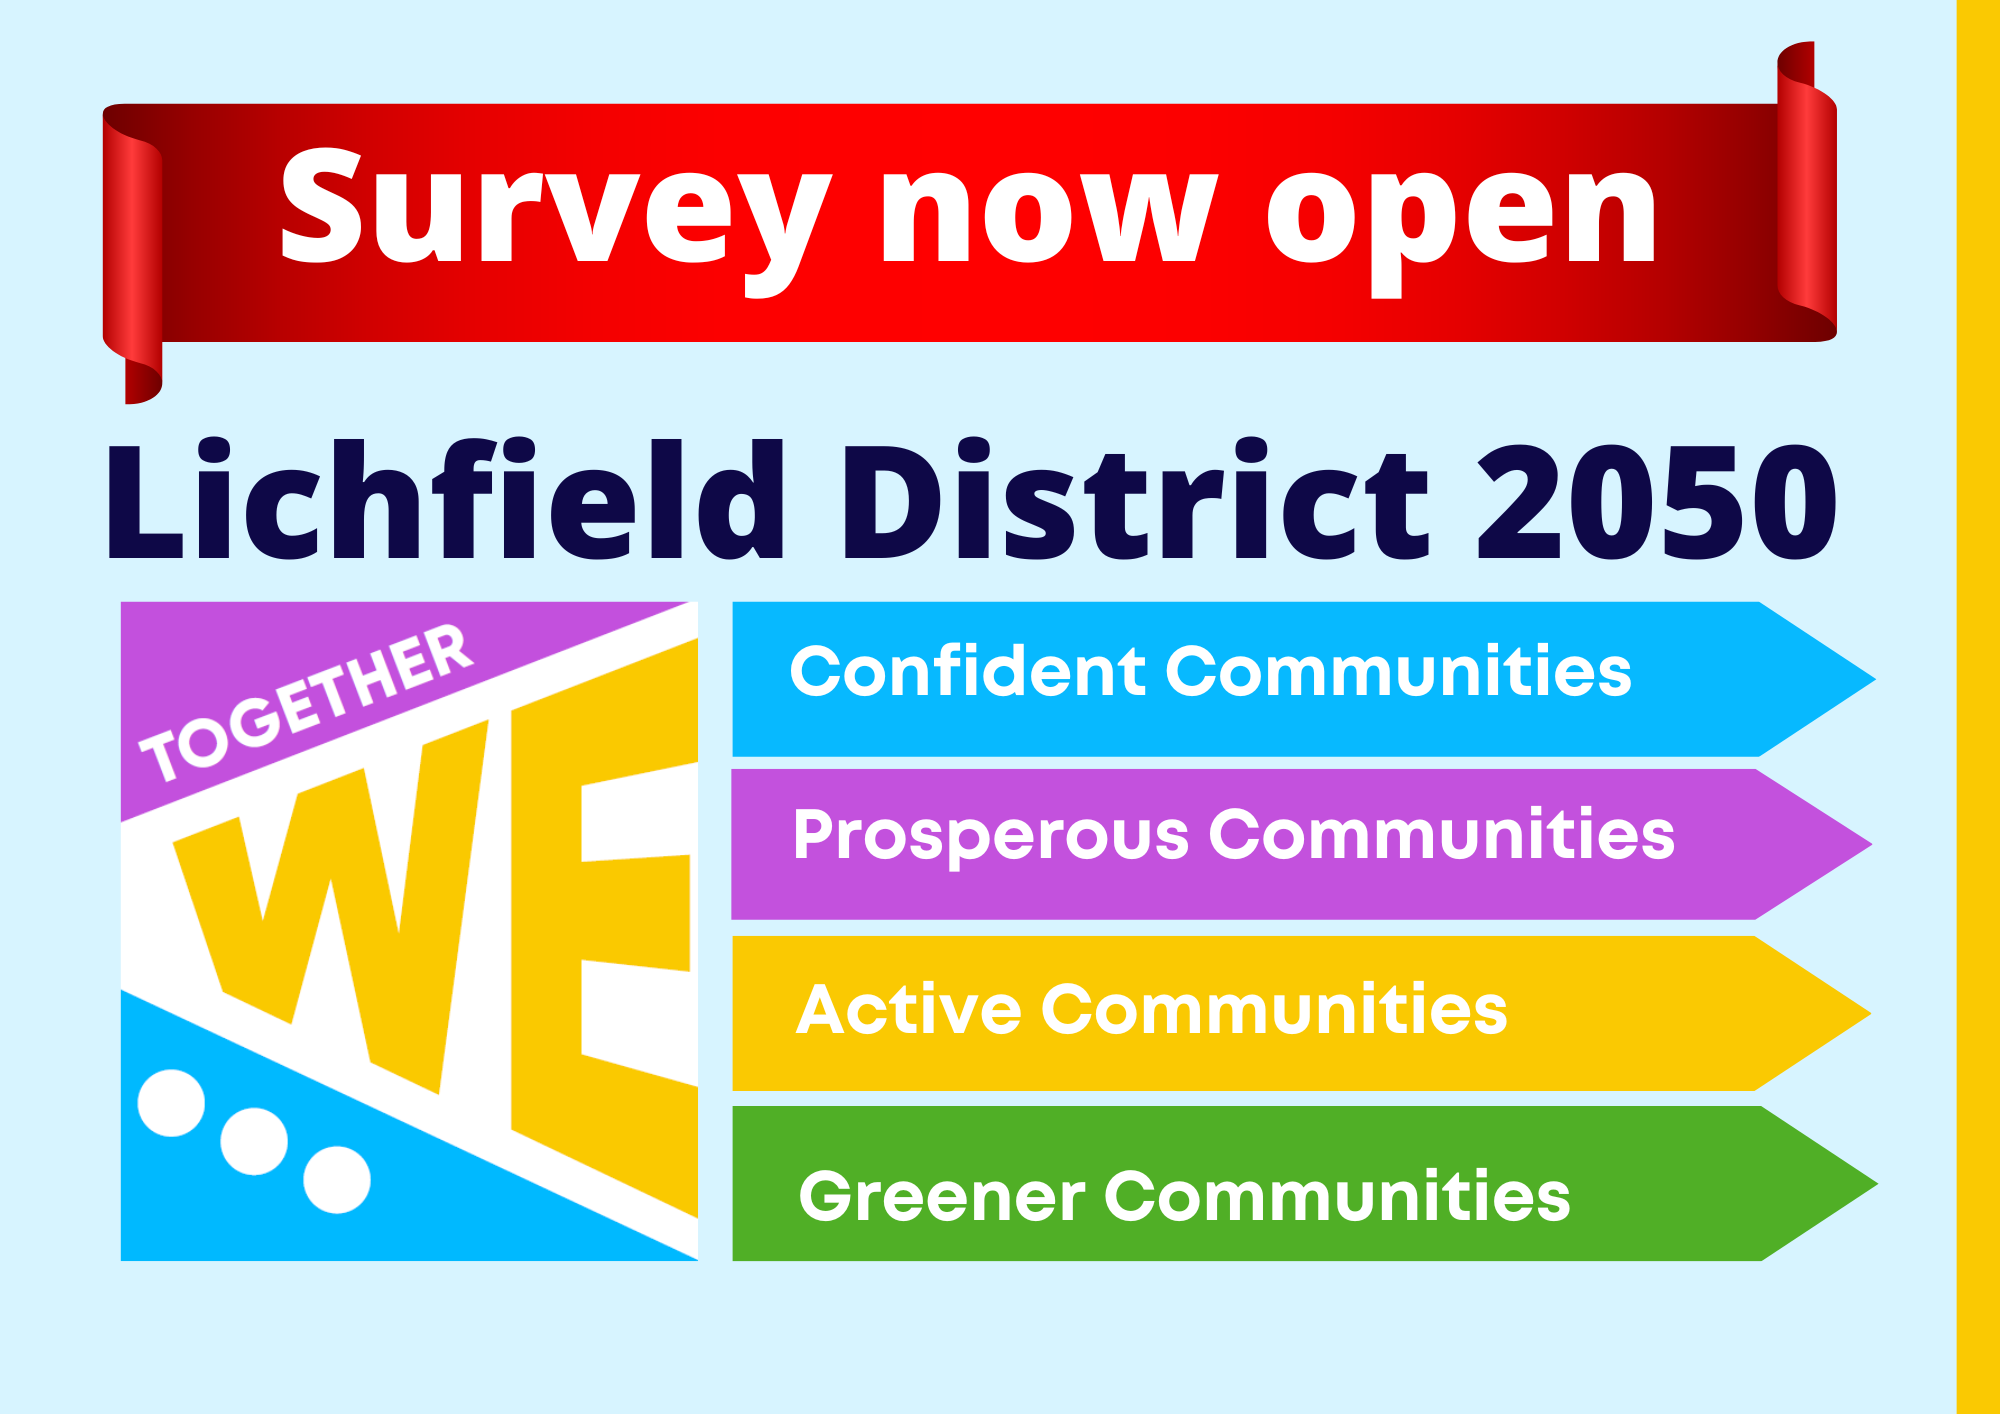 Lichfield District 2050 - Confident Communities, Prosperous Communities, Active Communities, Greener Communities